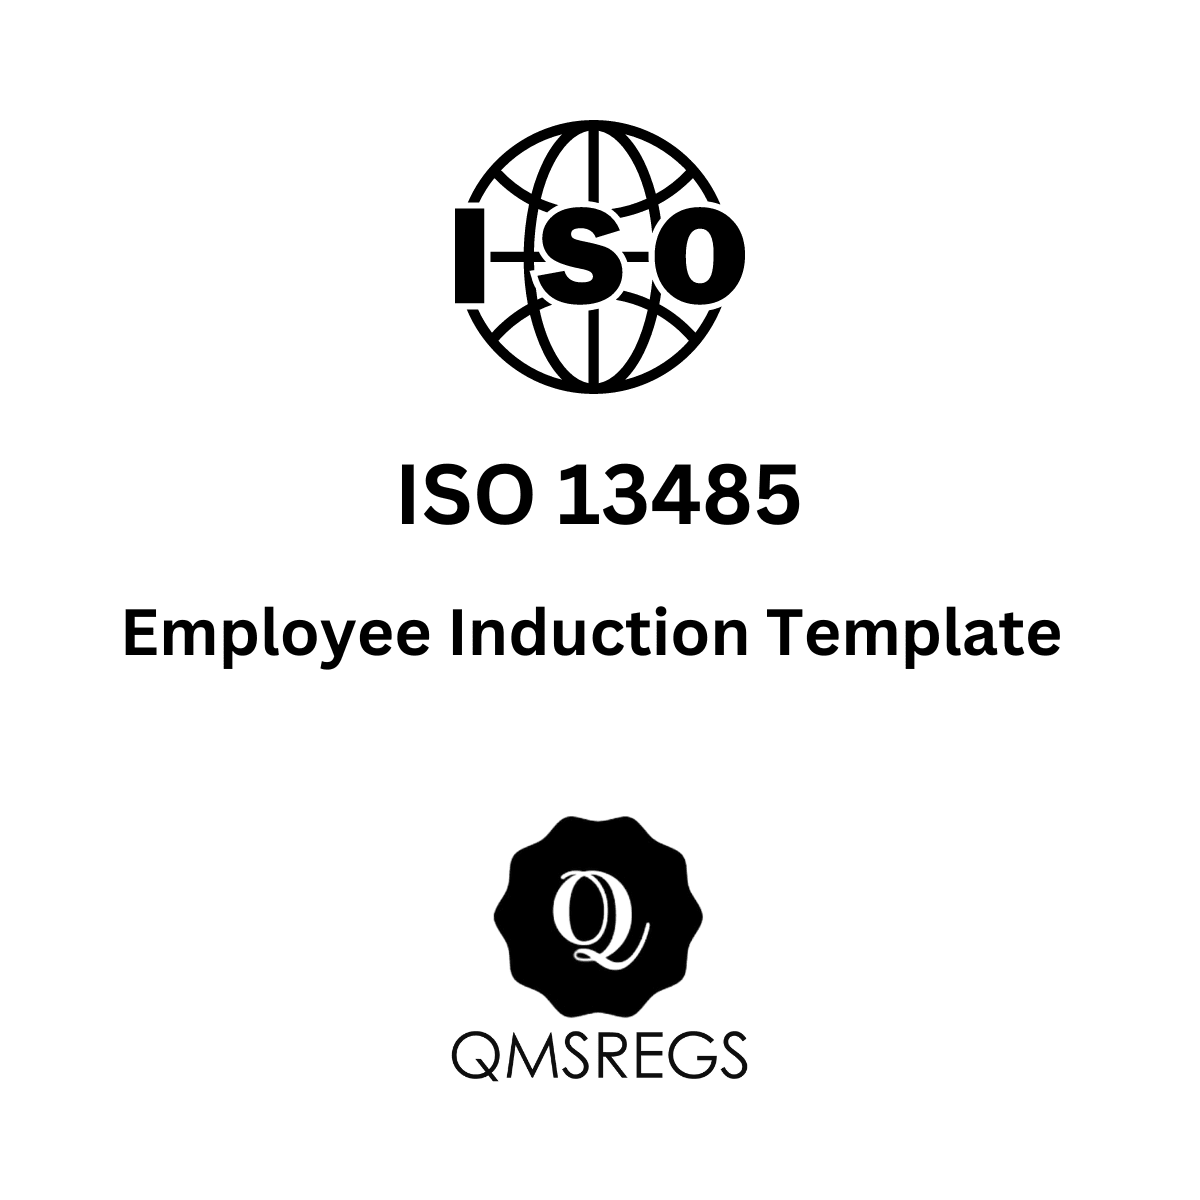 ISO 13485 Employee Induction Template